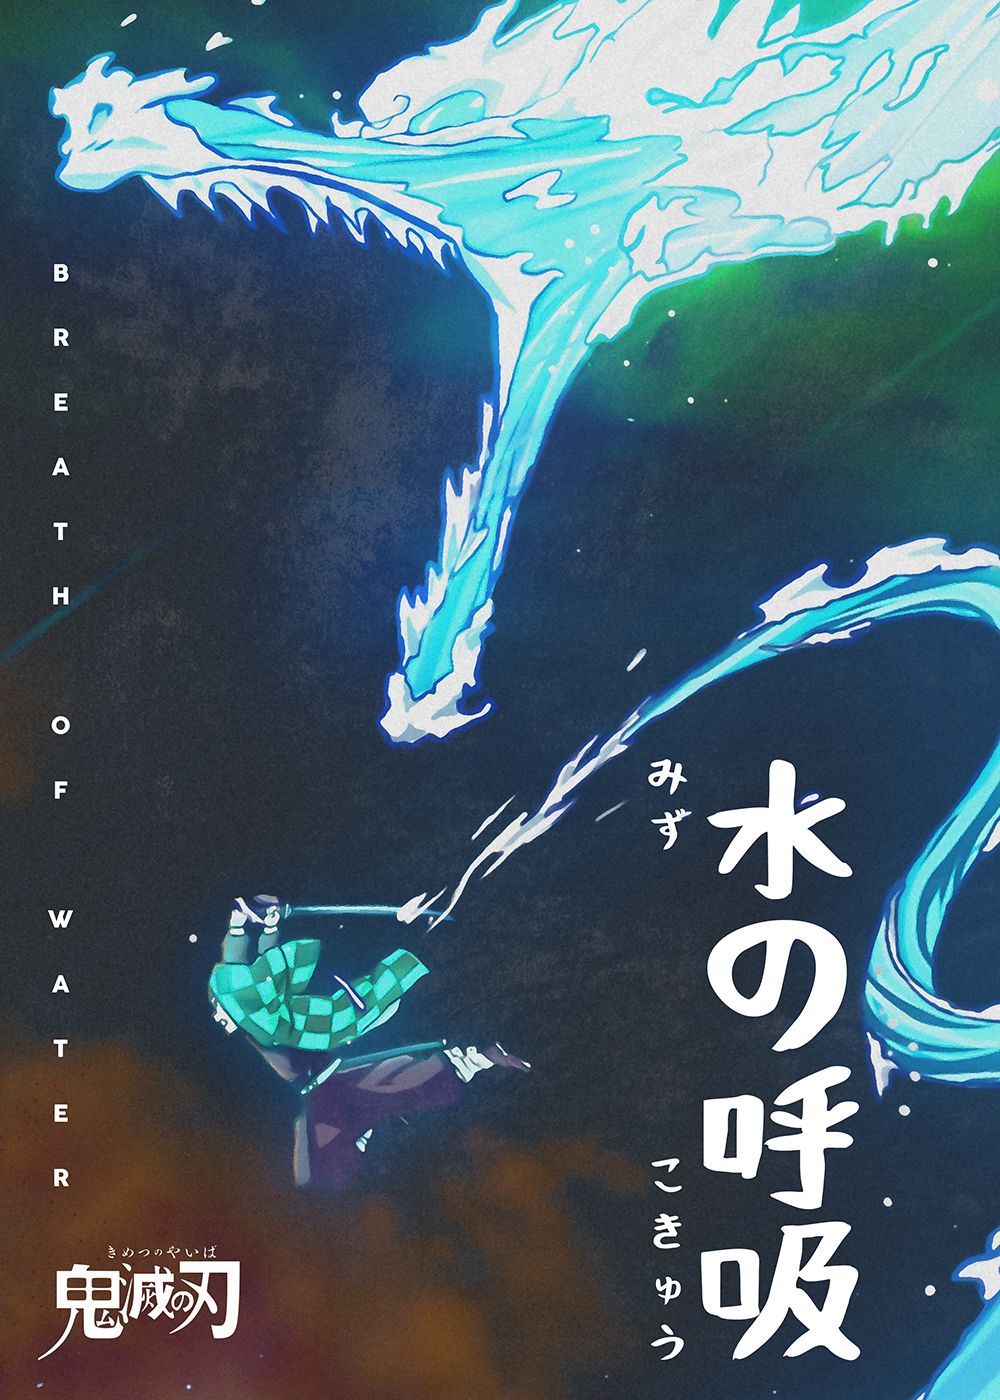 Anime Demon Slayer Tanjiro Breath of Water. Poster prints, Anime cover photo, Anime demon